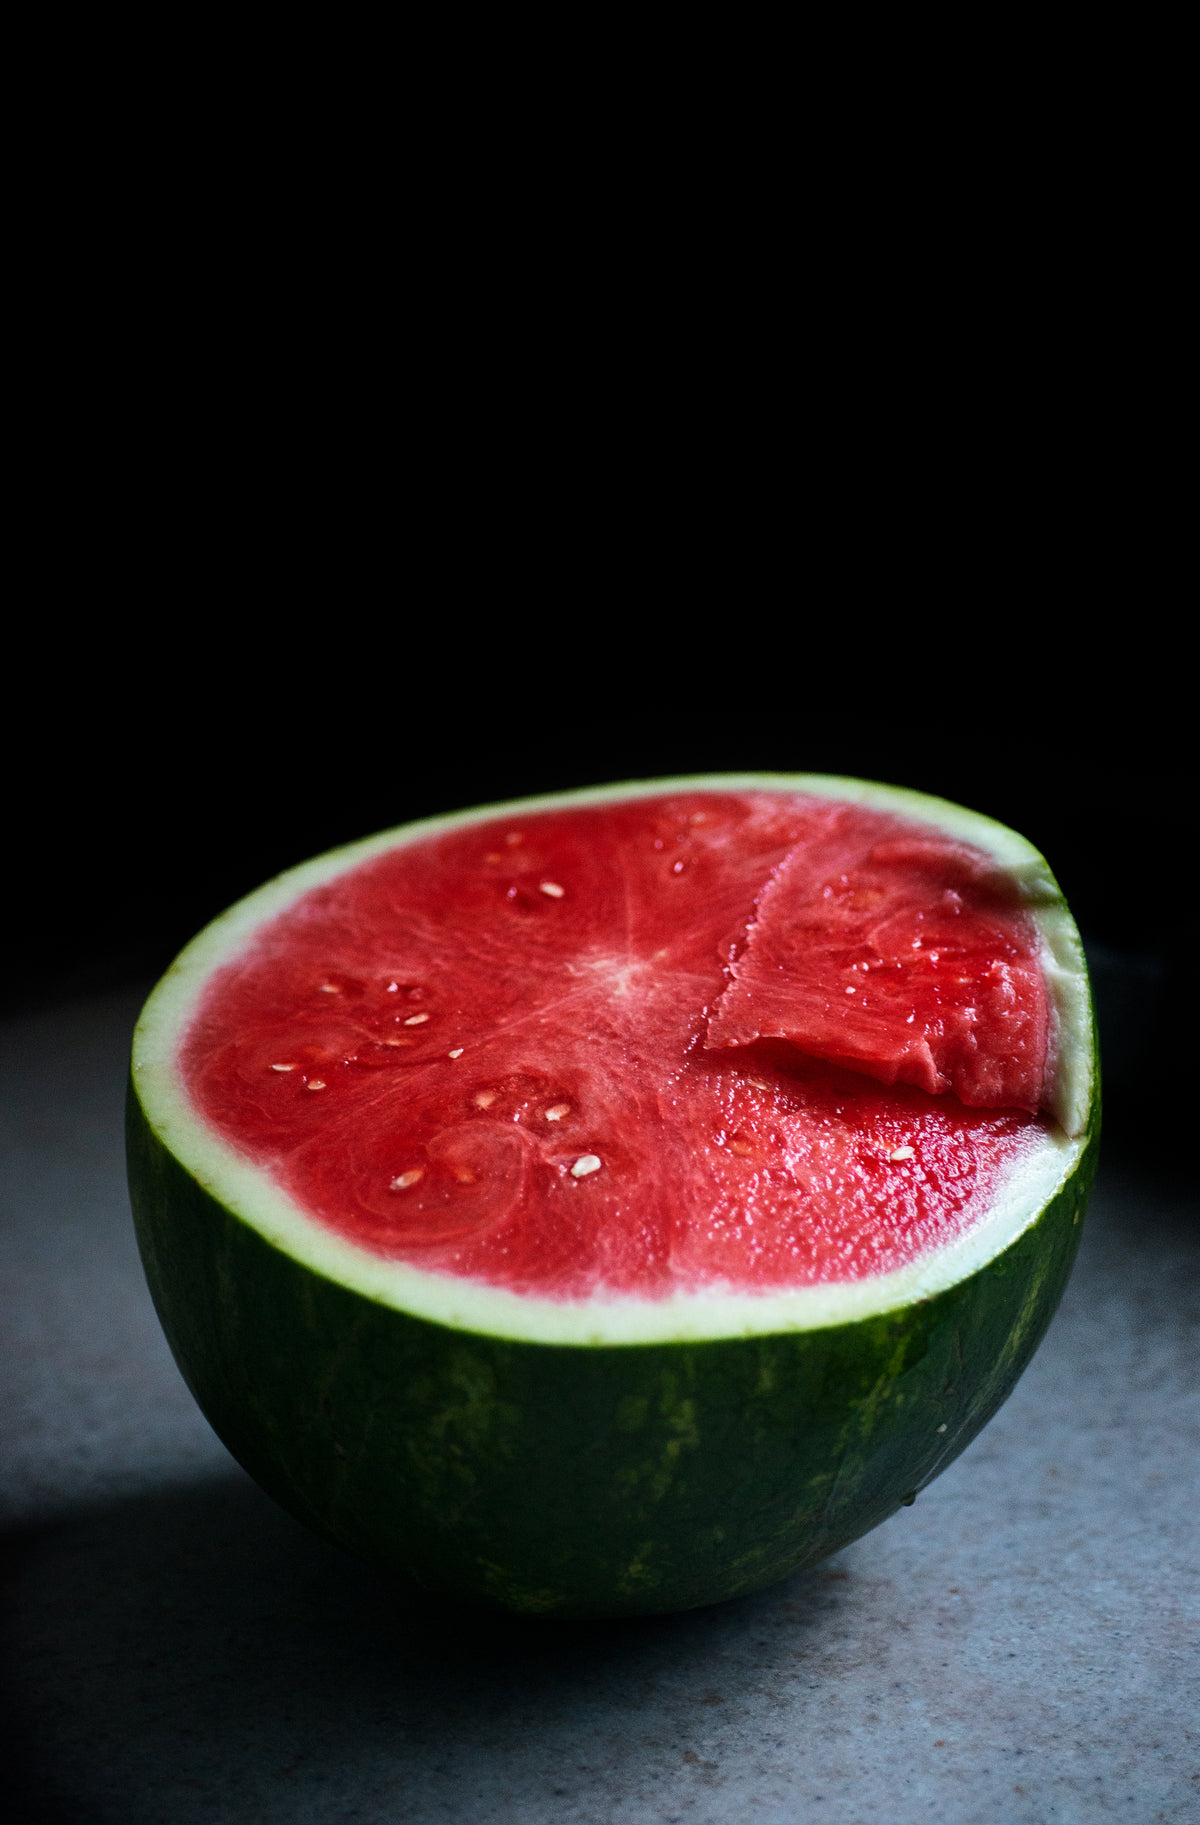 half of a perfect ripe watermelon on a countertop